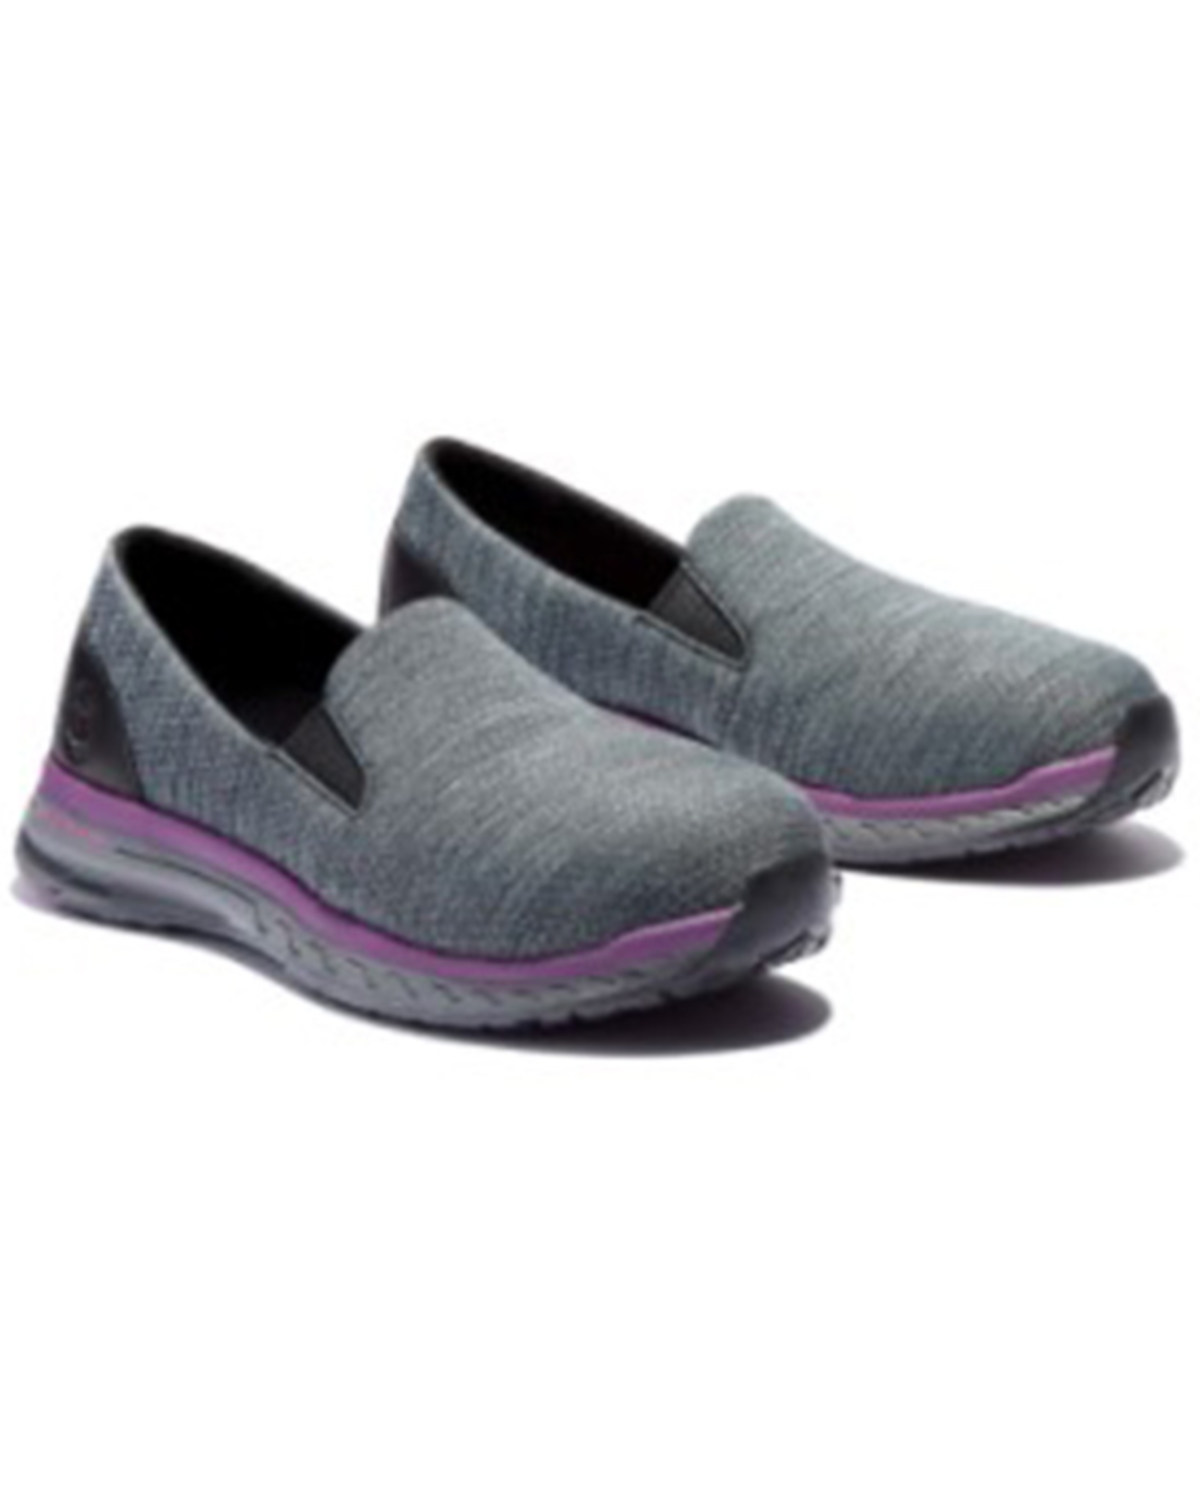 Timberland Women's Drivetrain Slip-On Work Shoes - Alloy Toe